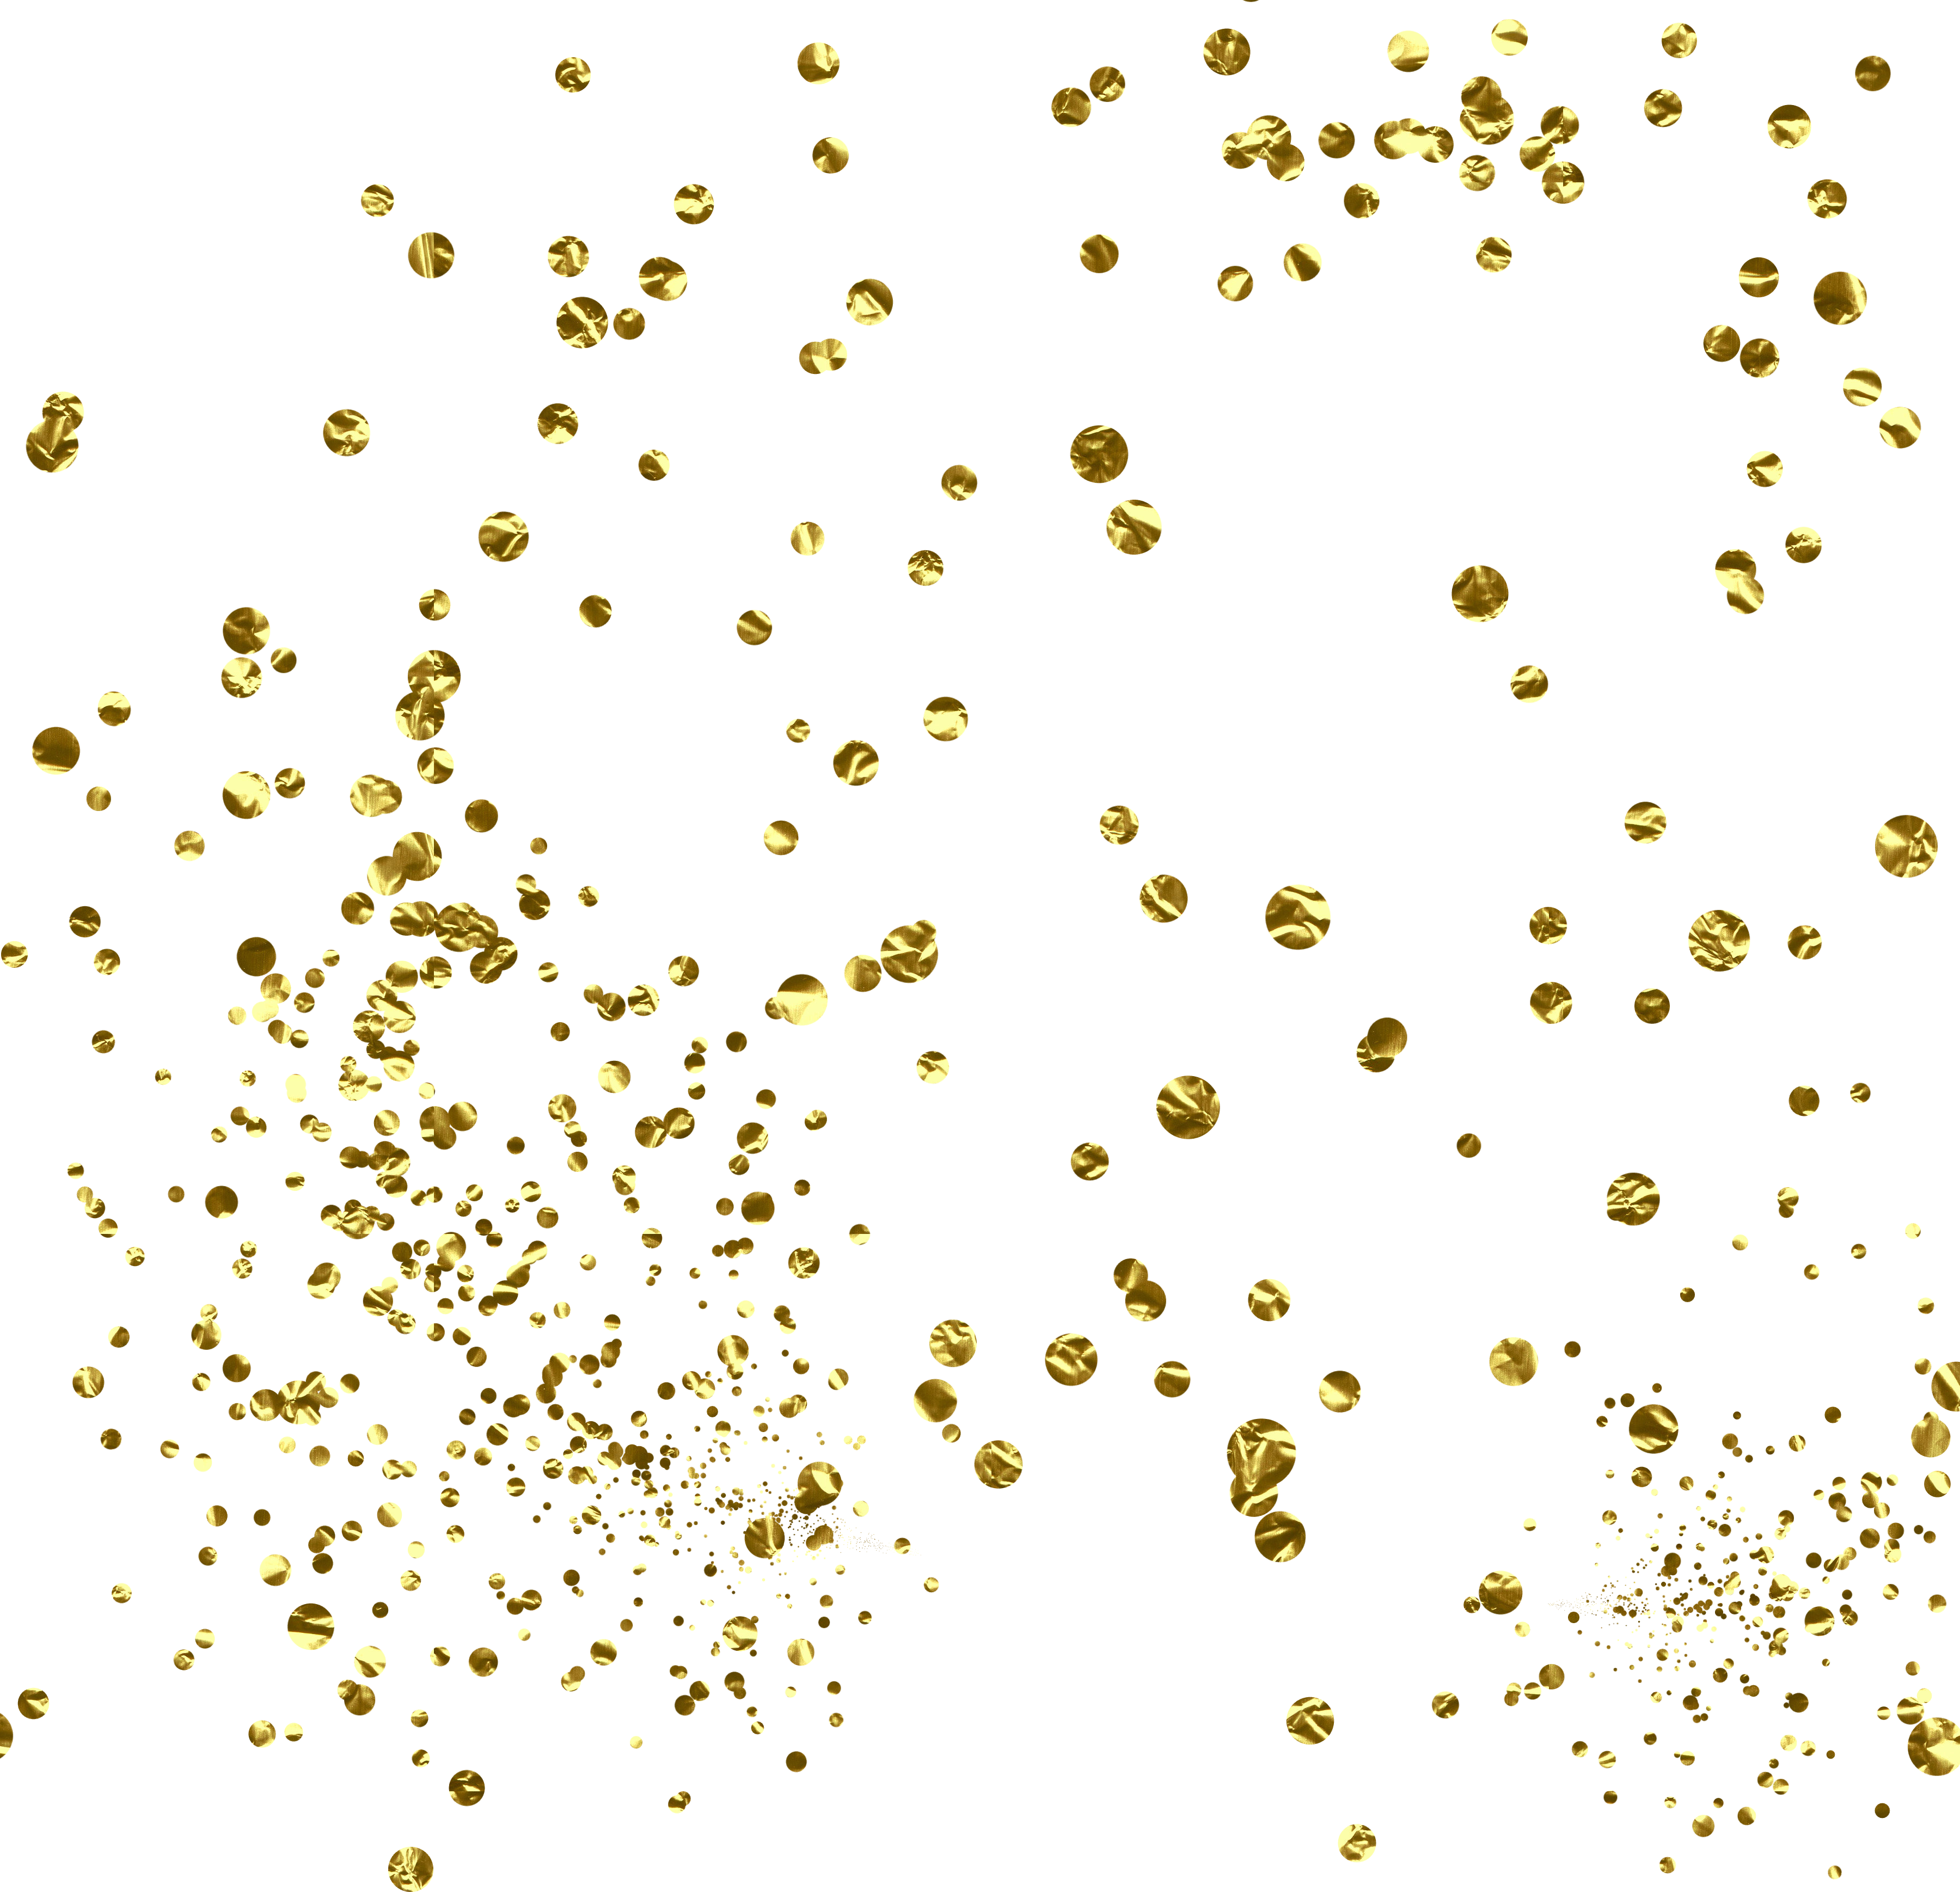 Gold Confetti Overlay 1 | Linda Ugelow